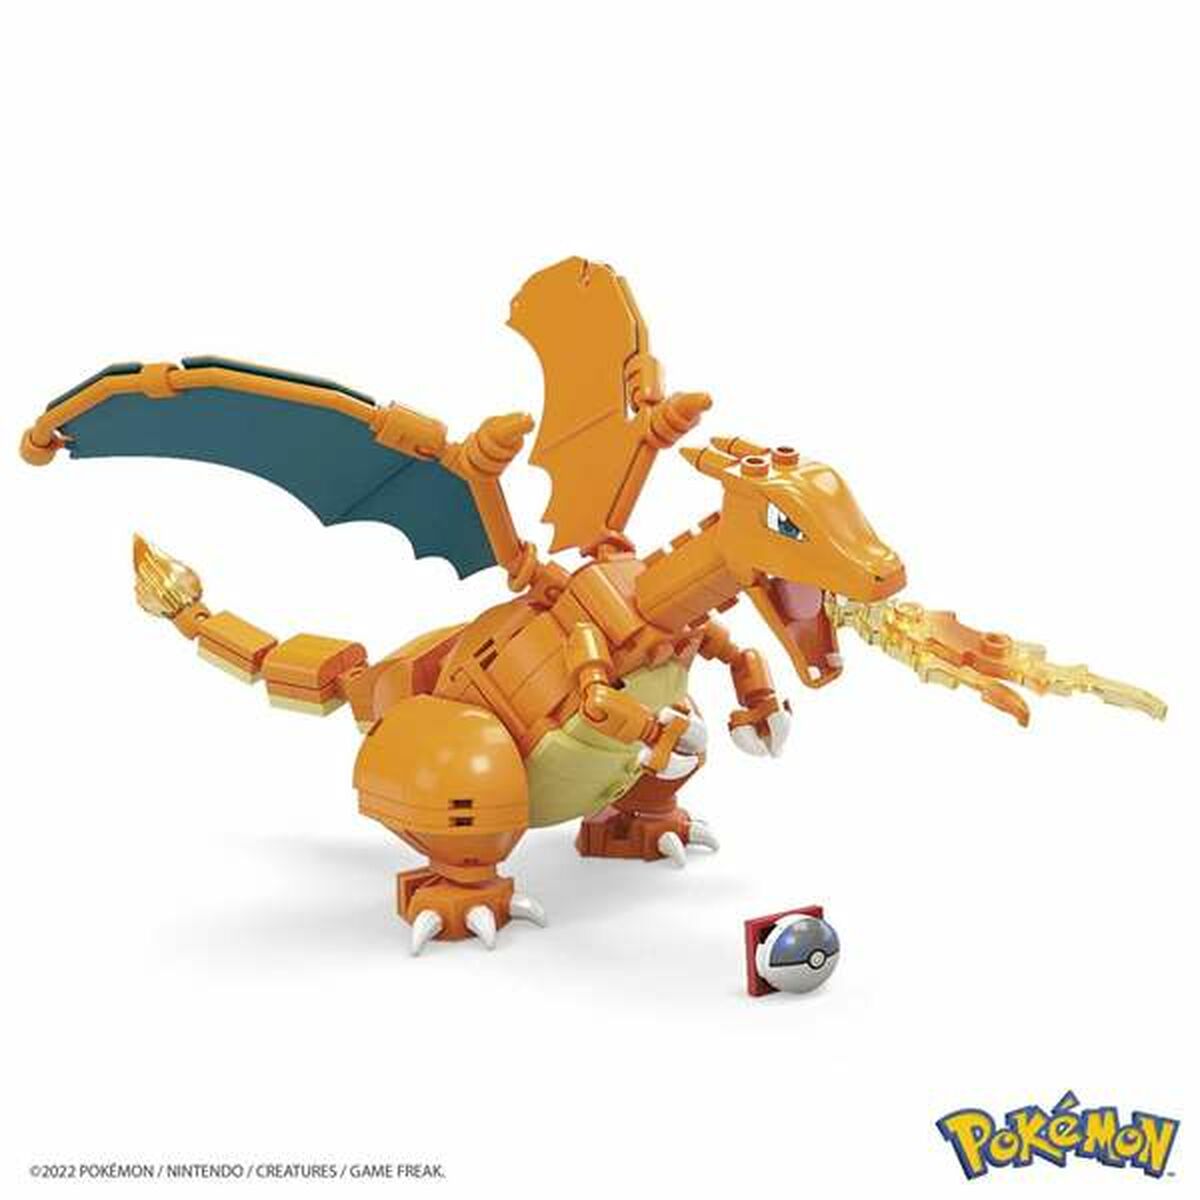 Bouwspel Pokémon Mega Charizard 222 Onderdelen